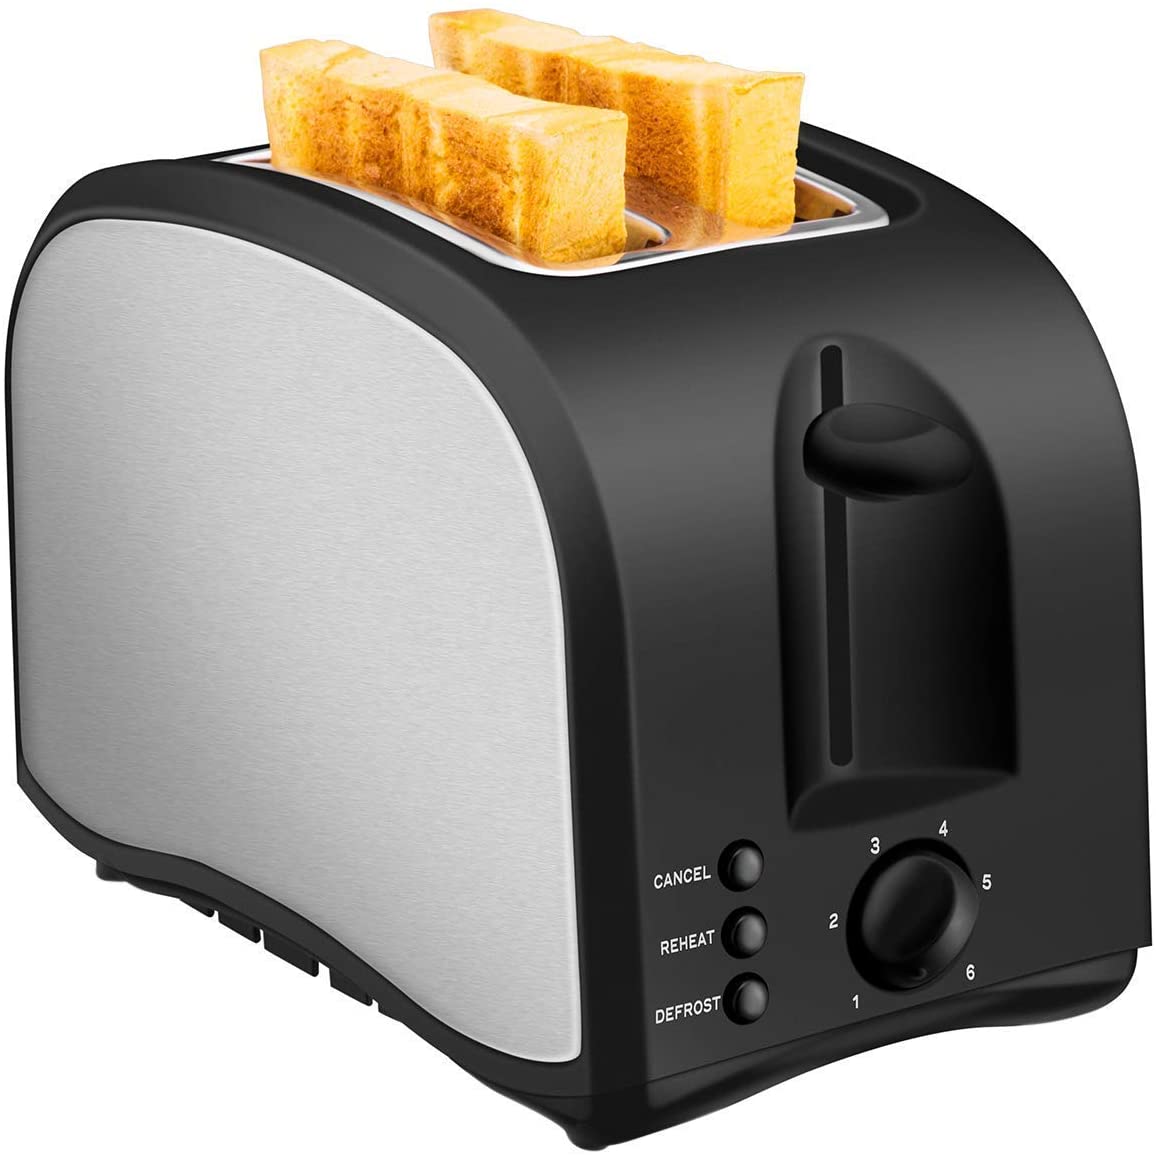 https://www.dontwasteyourmoney.com/wp-content/uploads/2020/05/cusinaid-2-slice-wide-slot-toaster-toaster.jpg